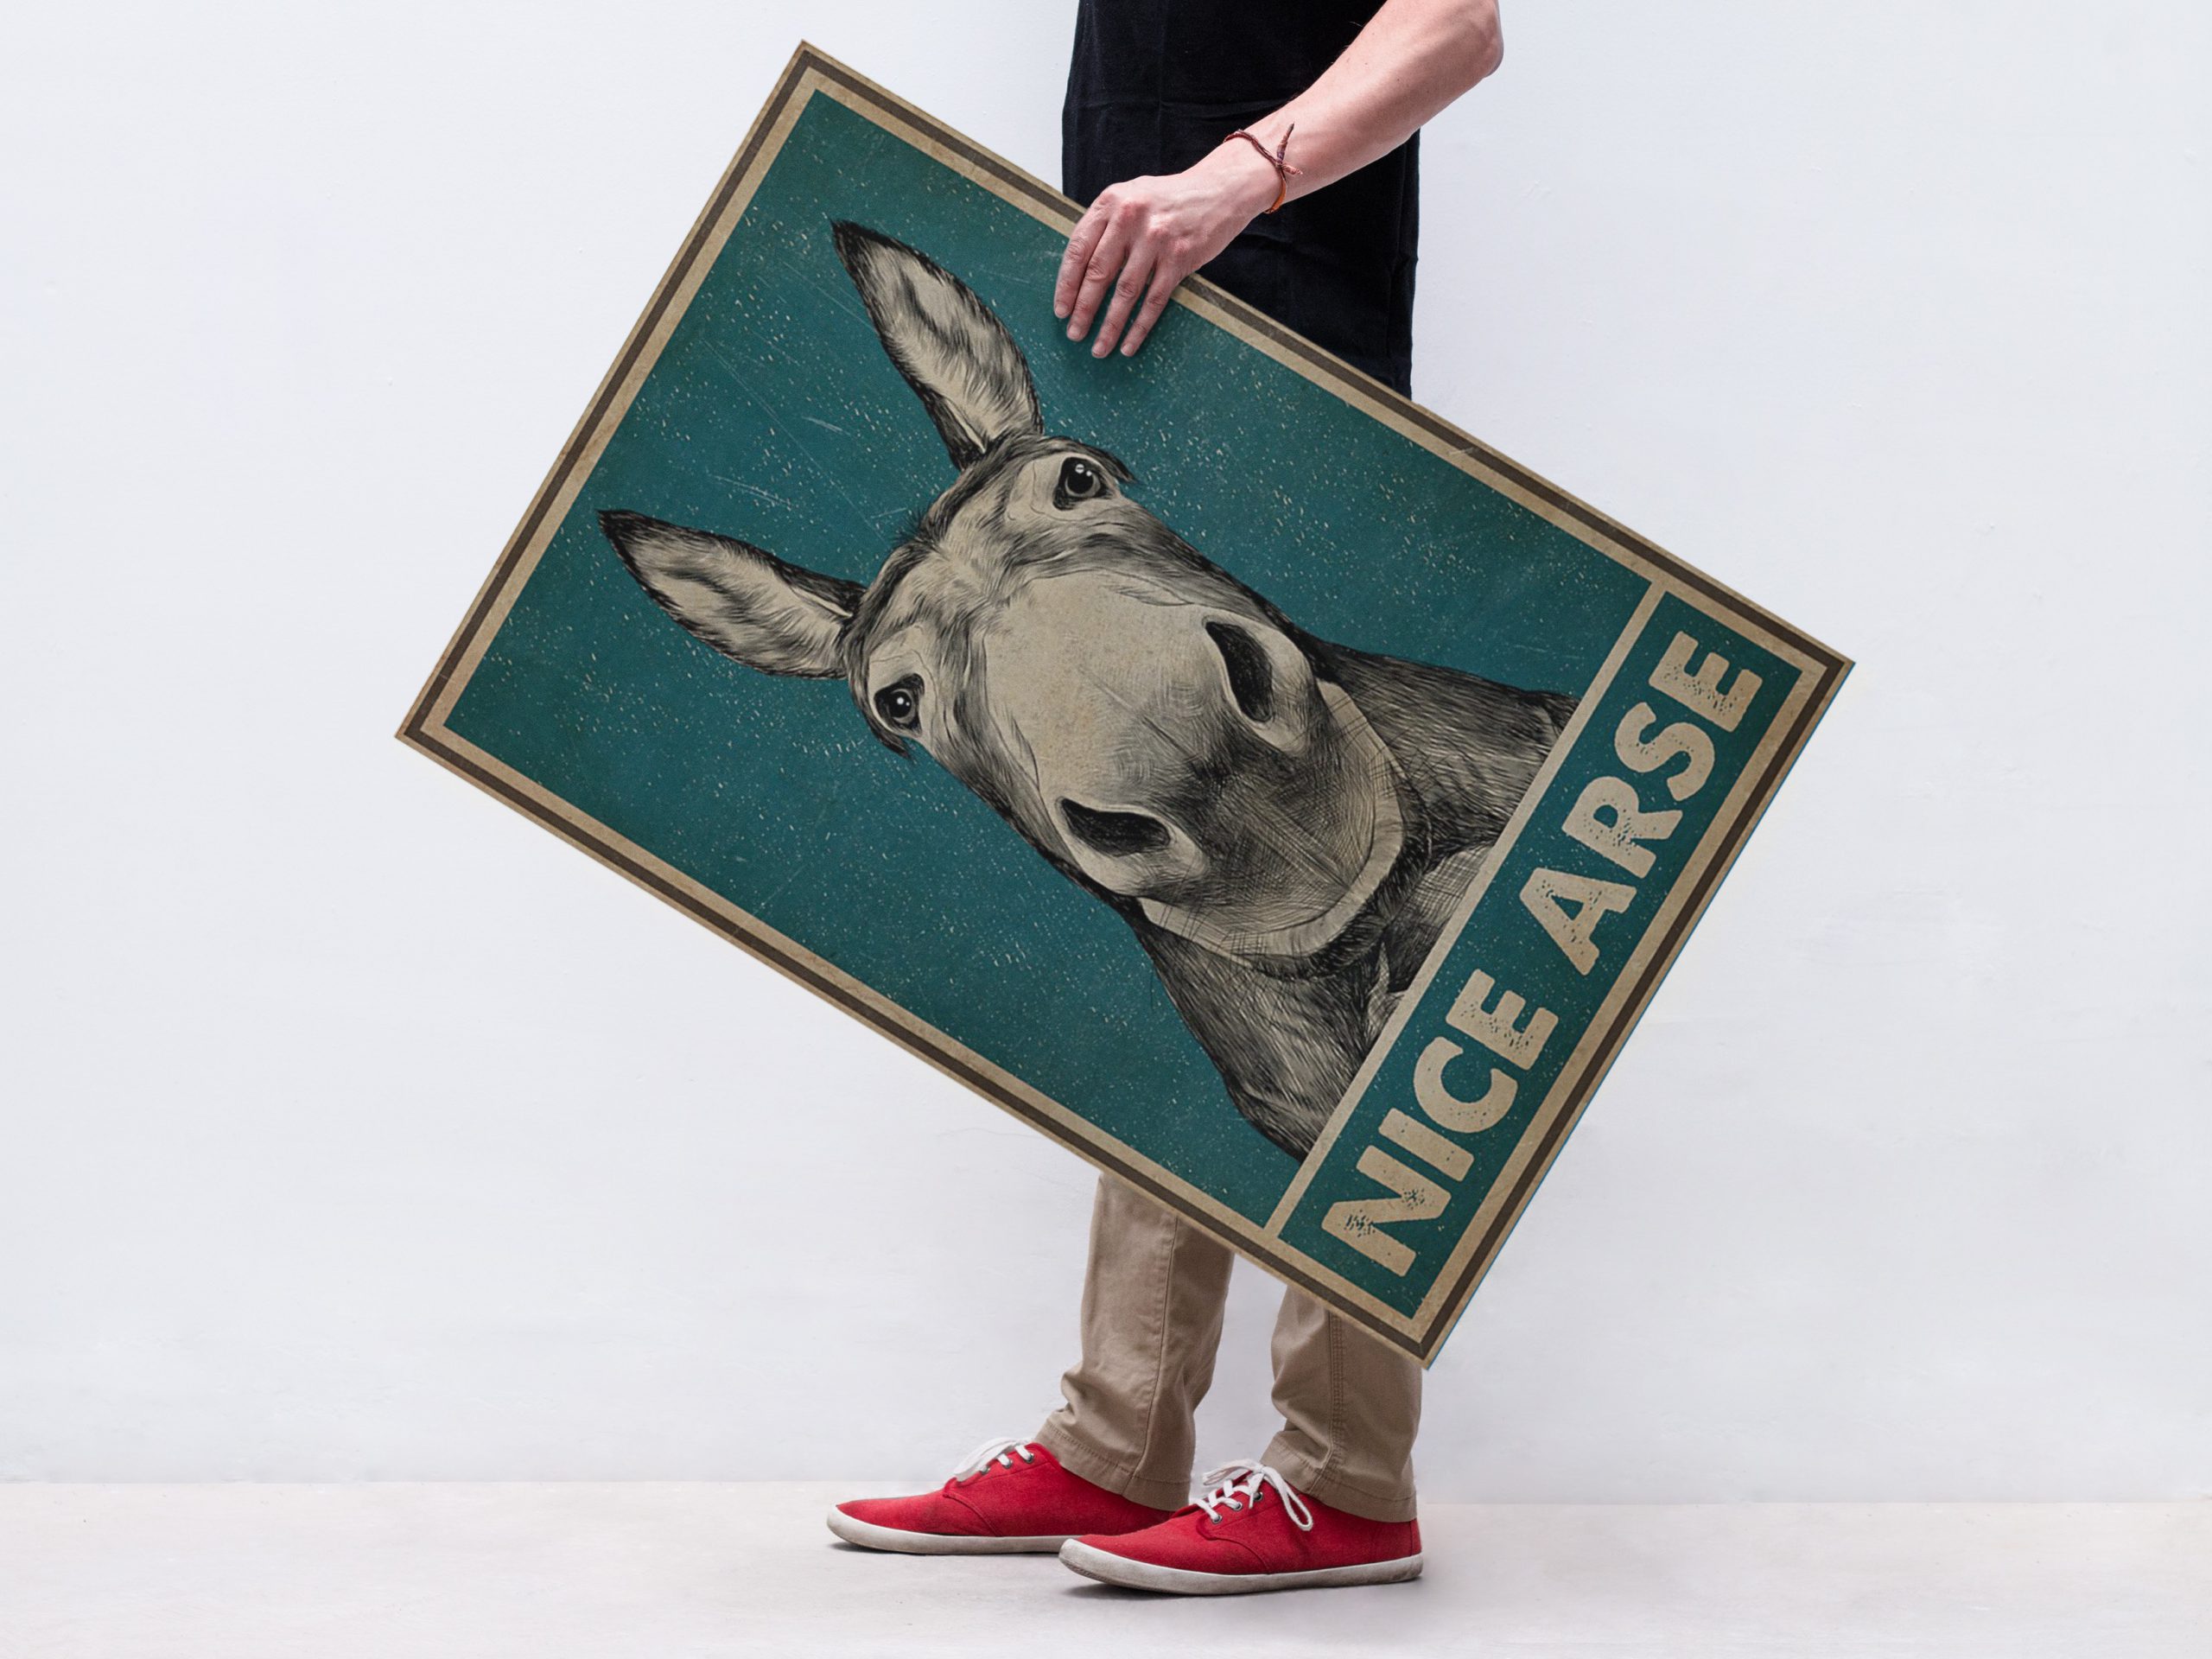 Donkey nice arse poster 2